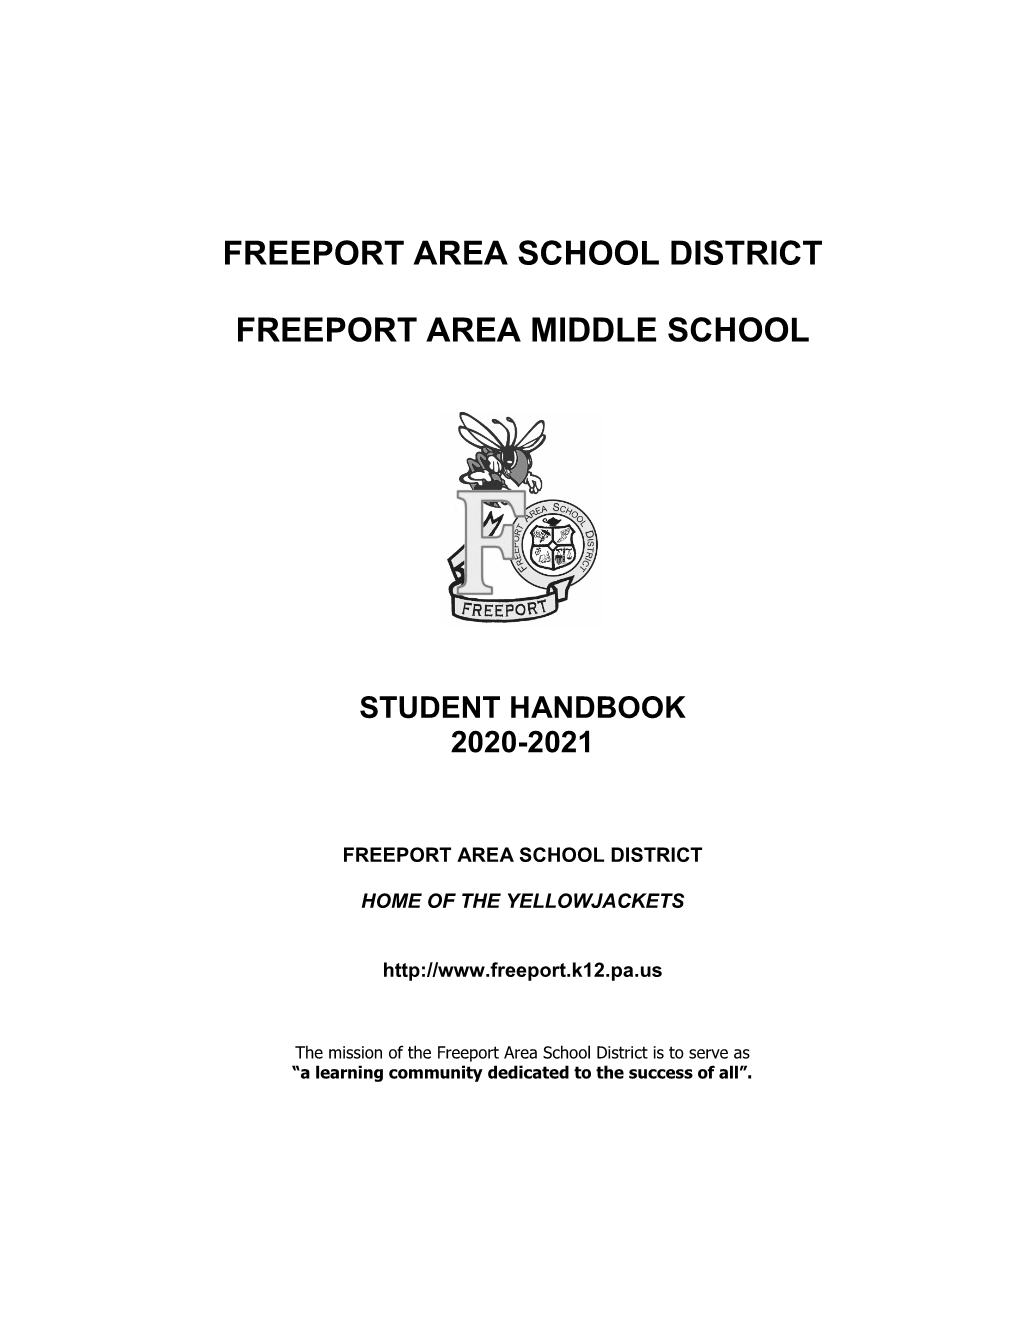 Middle School Student Handbook 2020-2021.Pdf